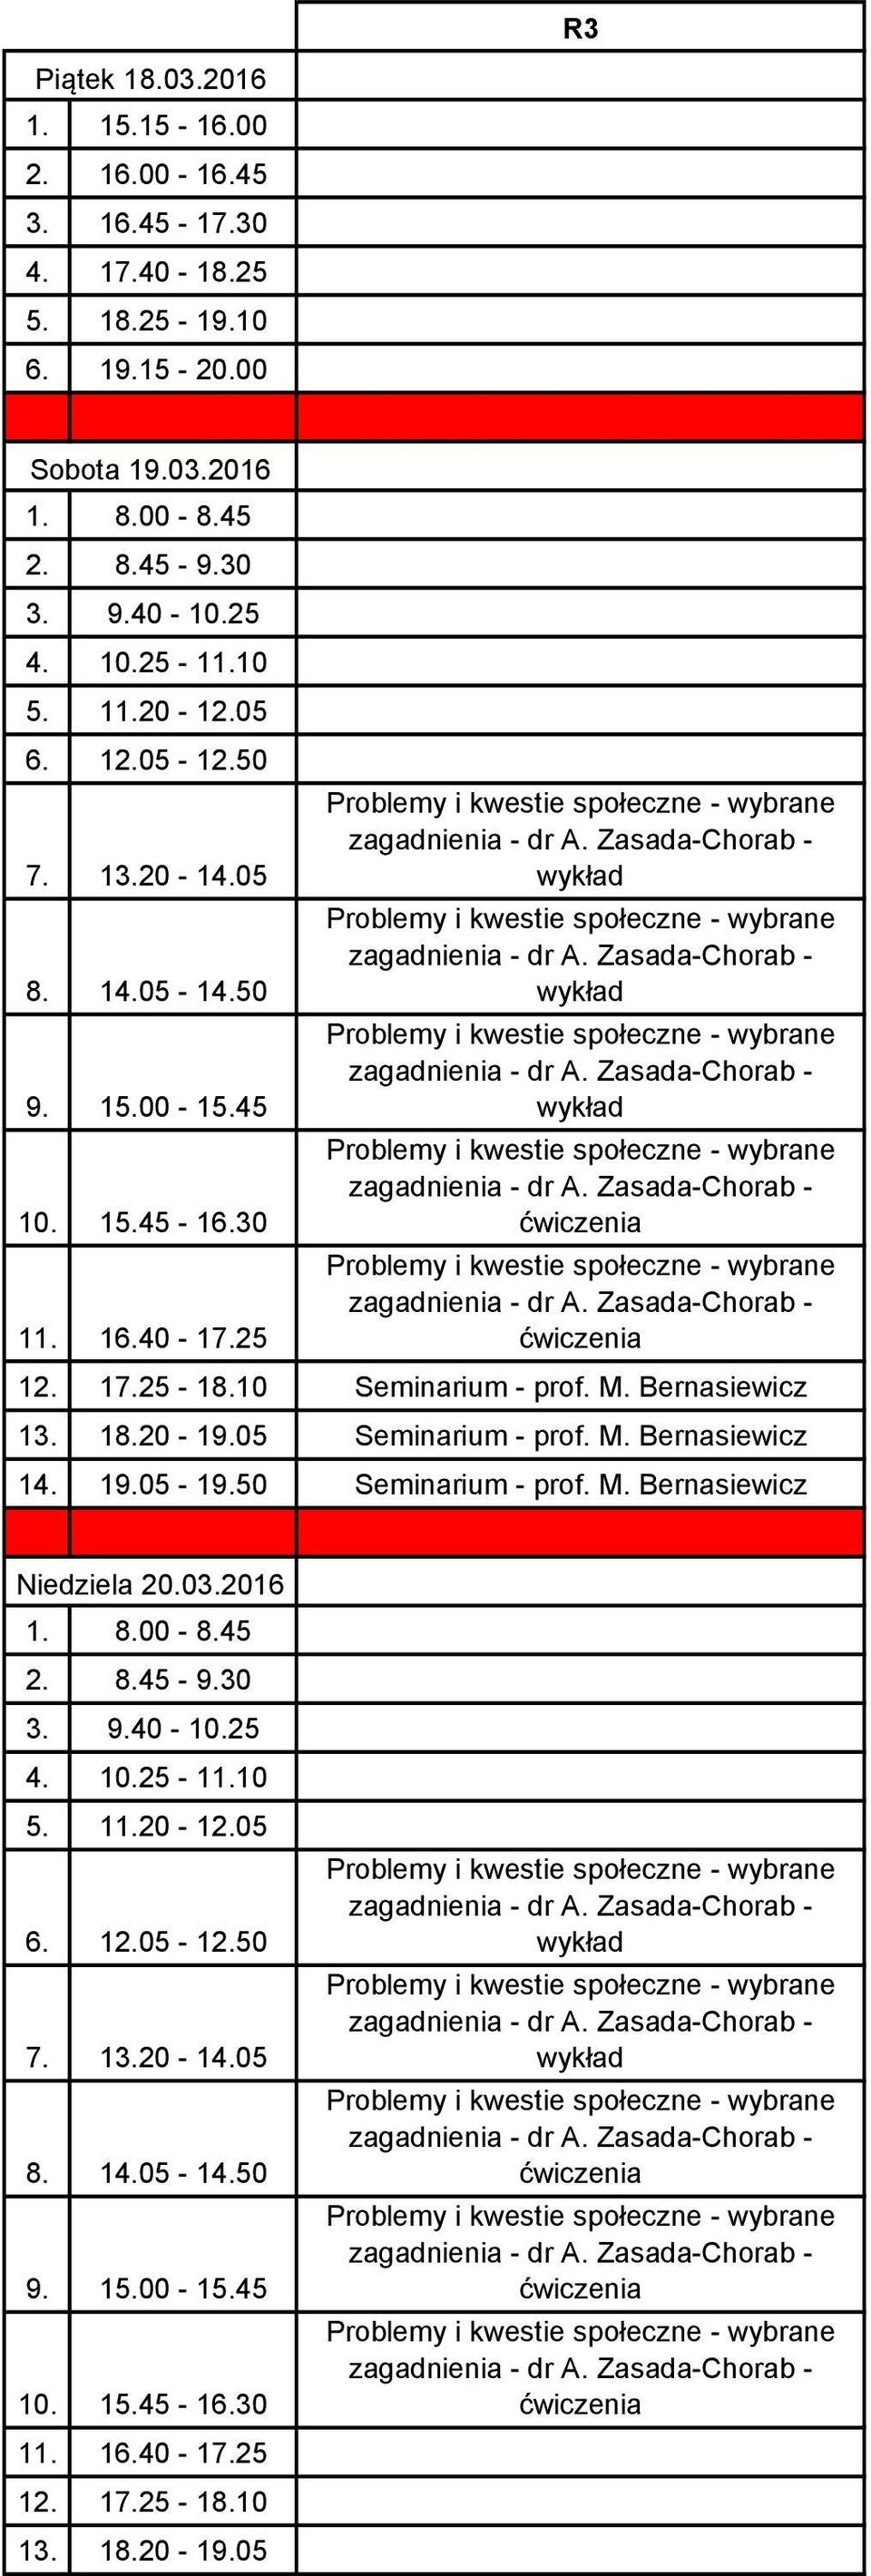 Bernasiewicz Seminarium - prof. M.